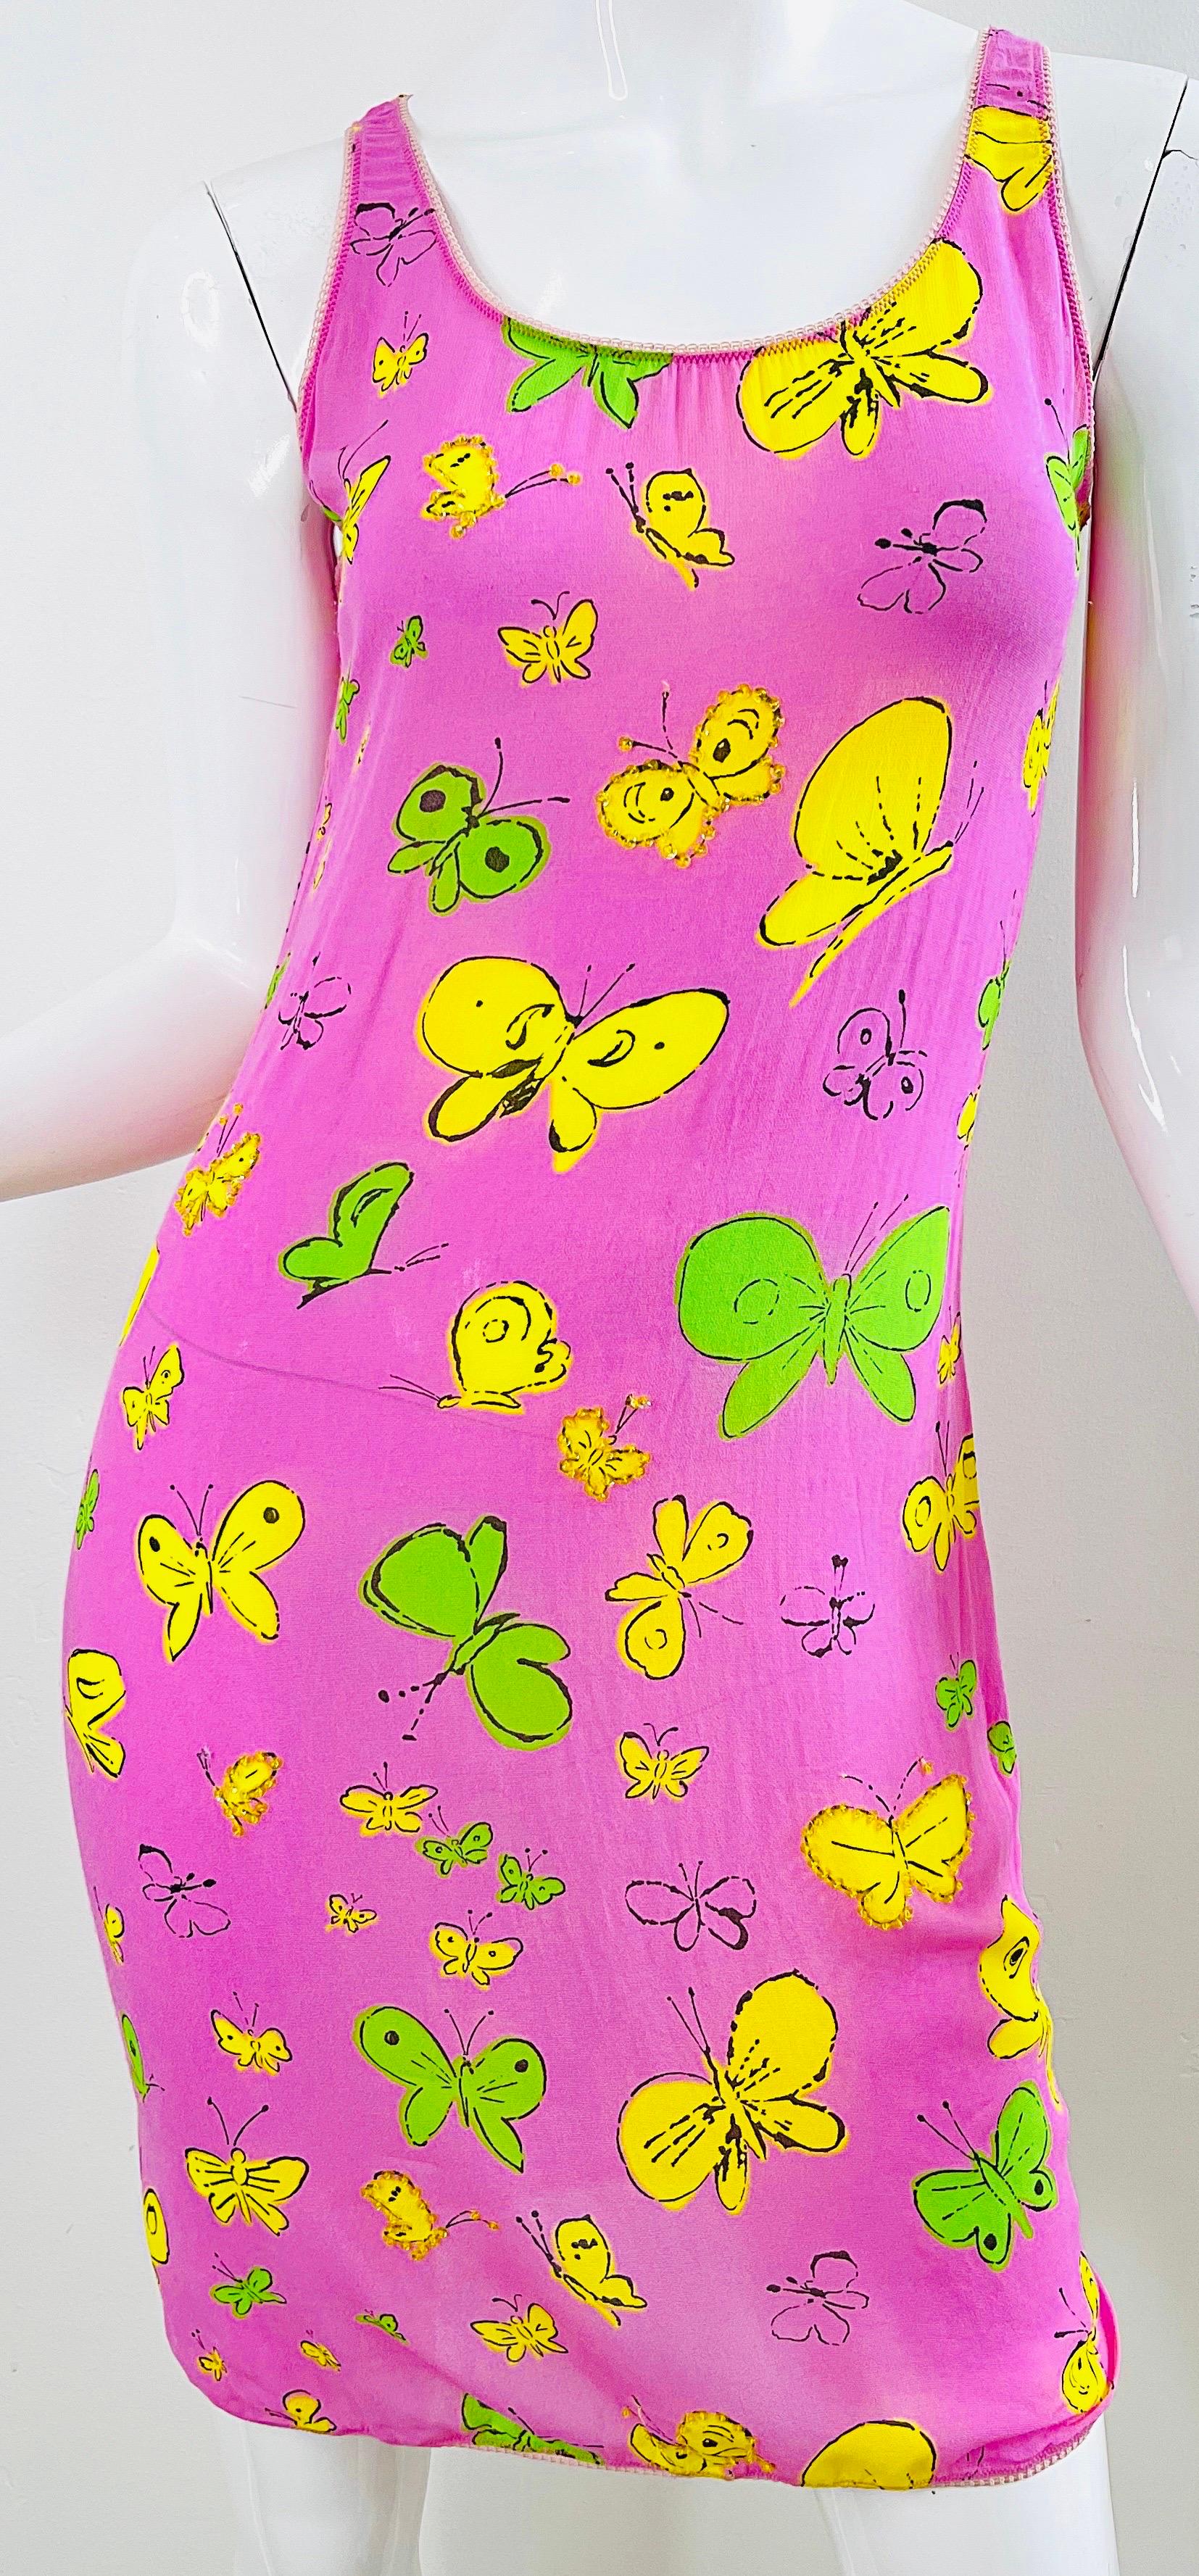 BARBIE 1990s Versus Gianni Versace Bubblegum Pink Beads Butterfly Dress Cardigan For Sale 8